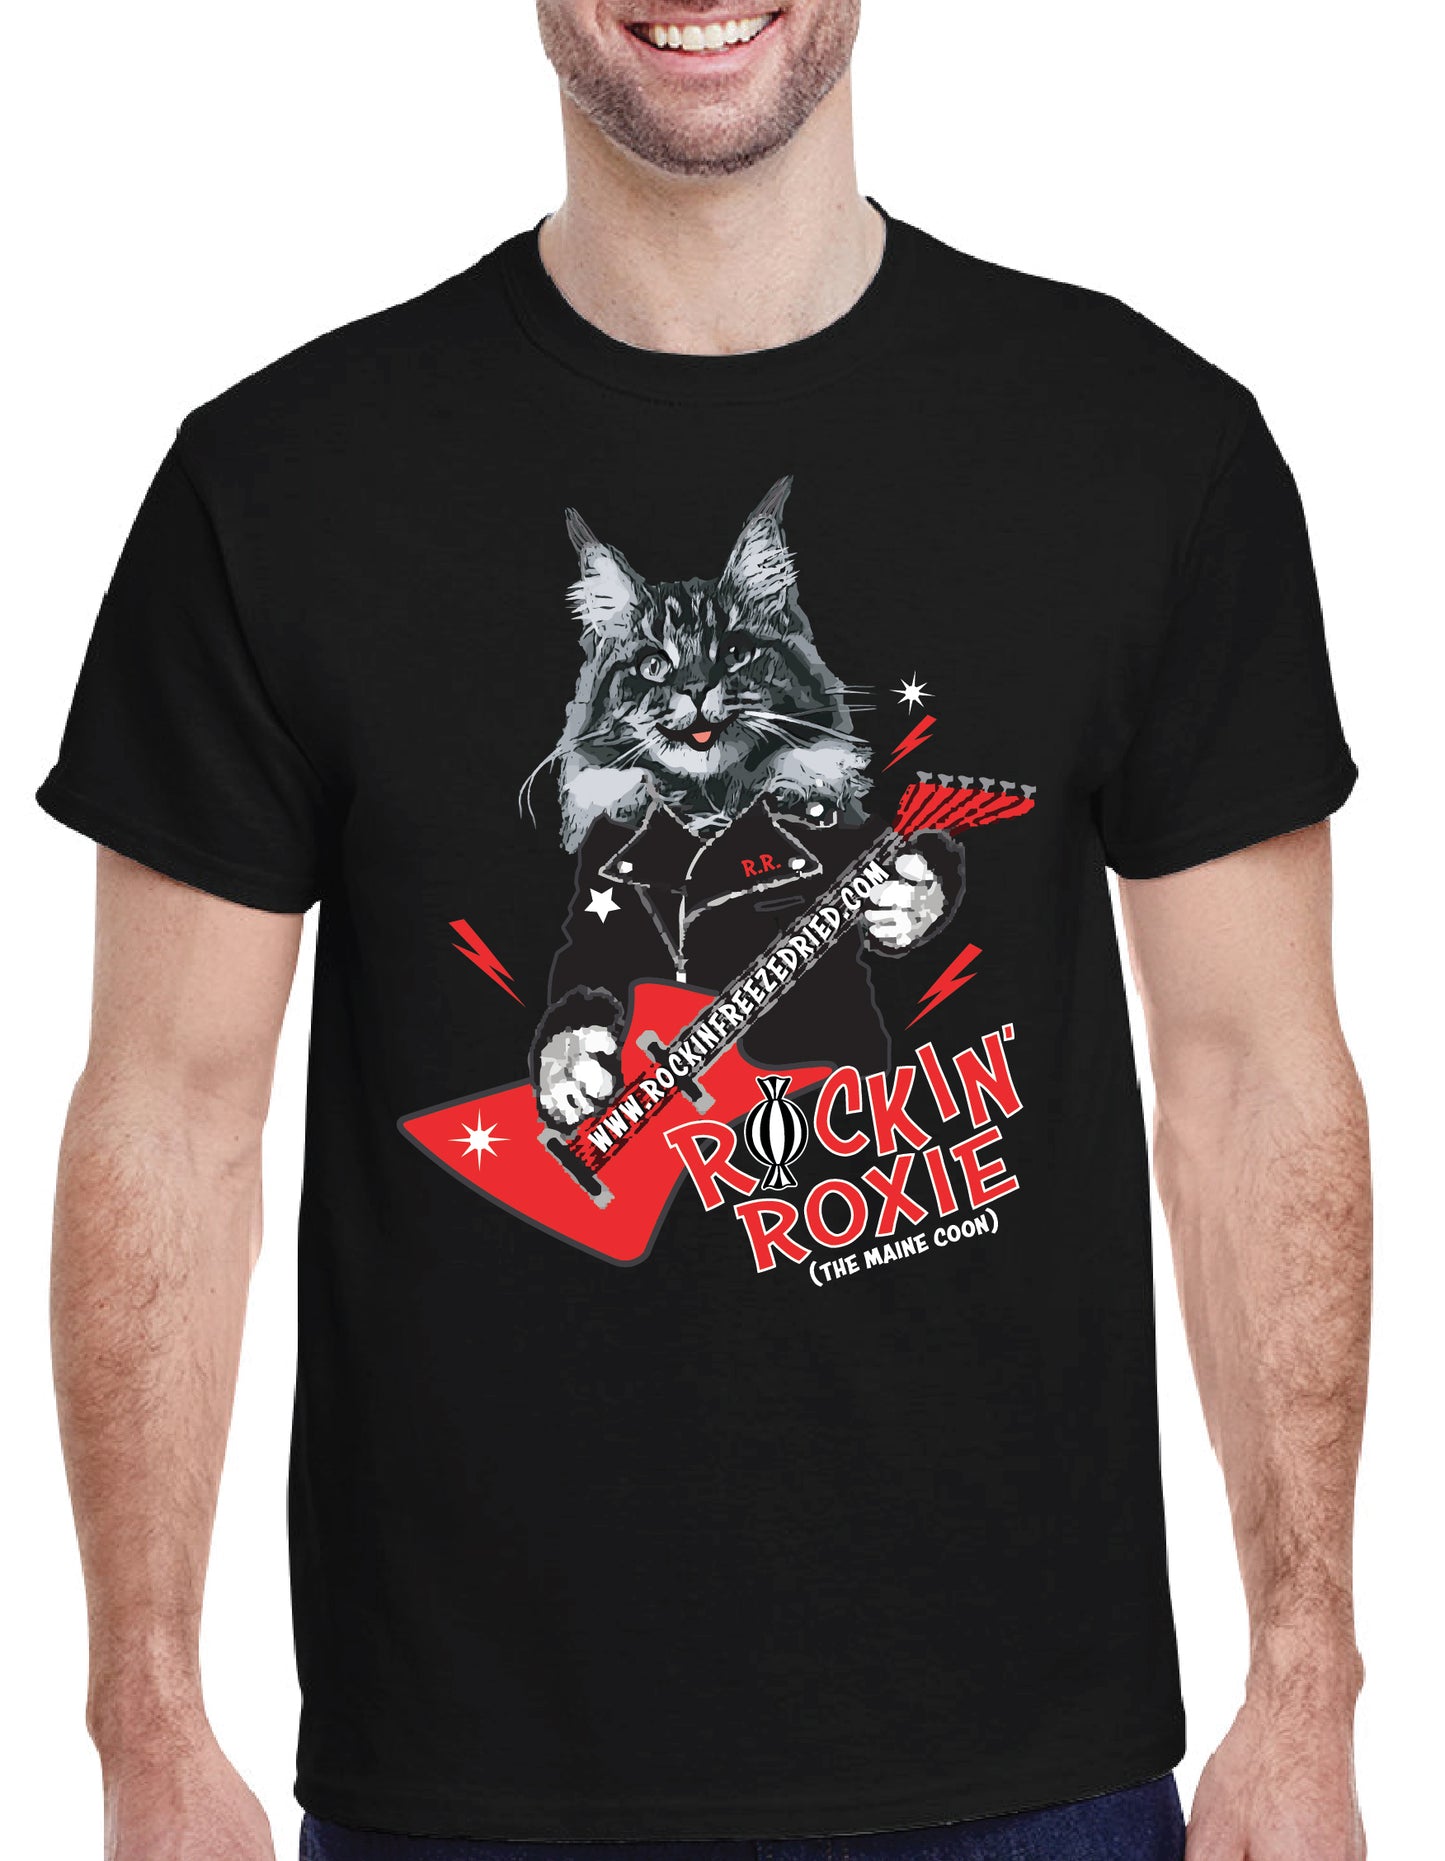 T-Shirt "Rockin' Roxie" Tee (MEN'S)